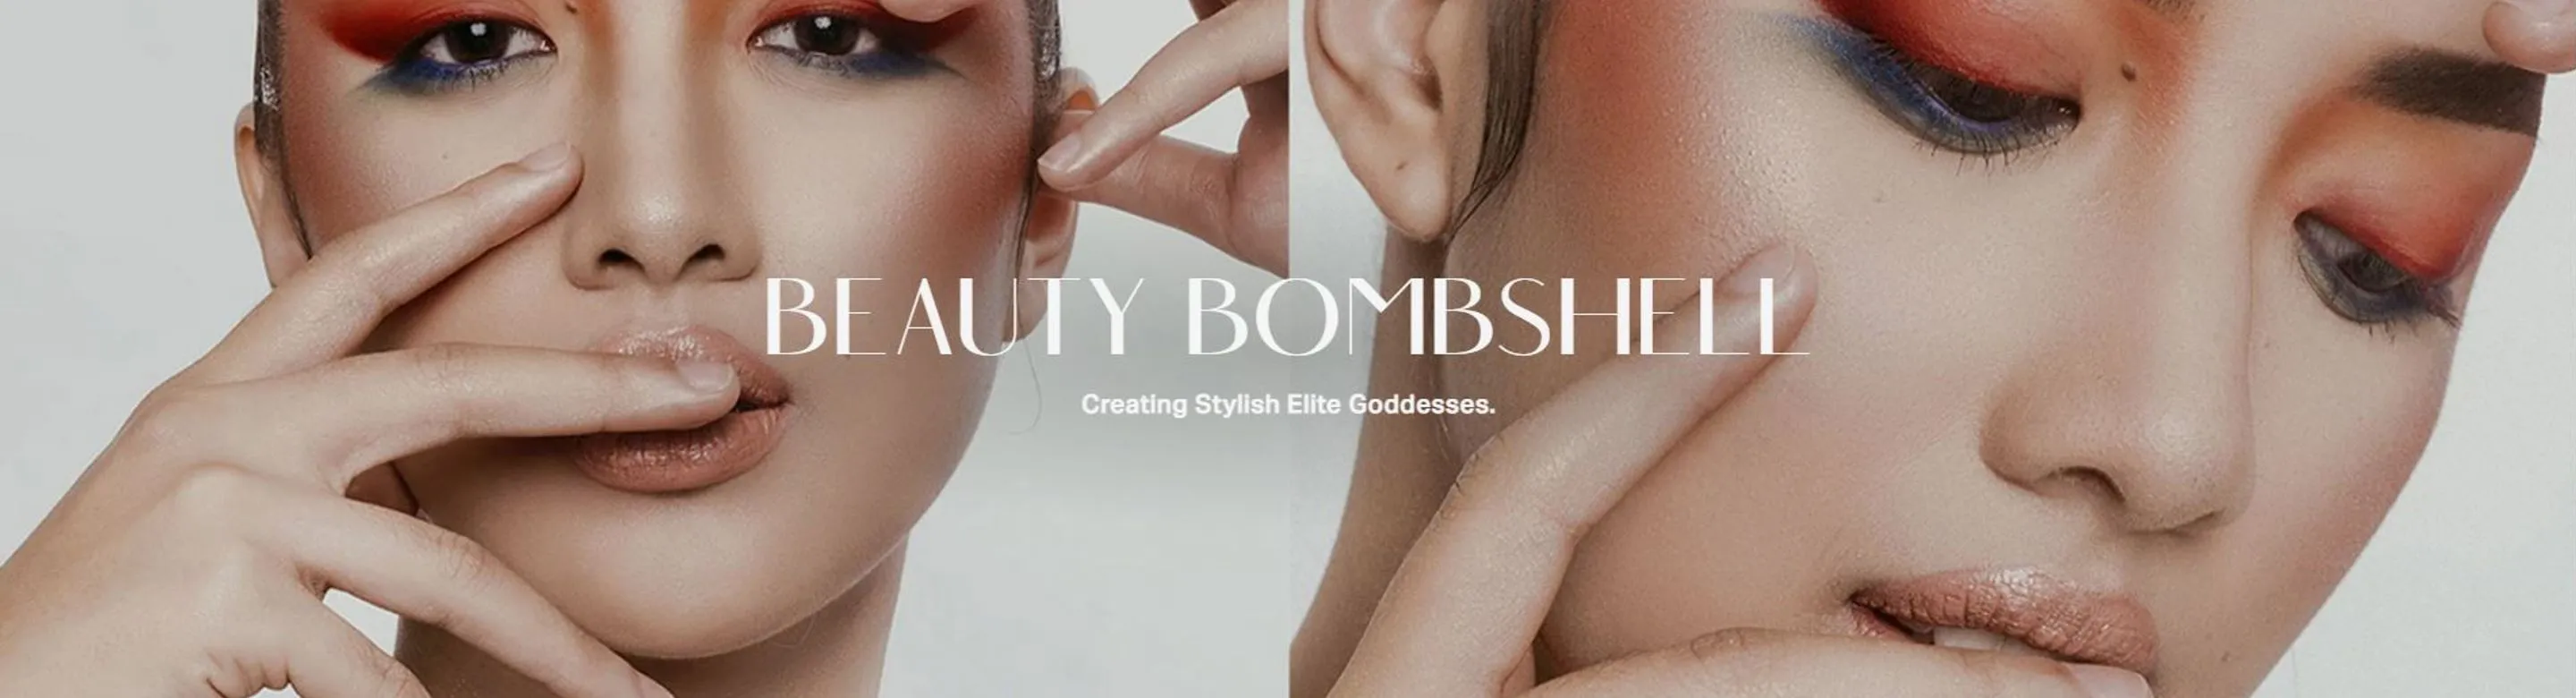 Beauty Bombshell Limited